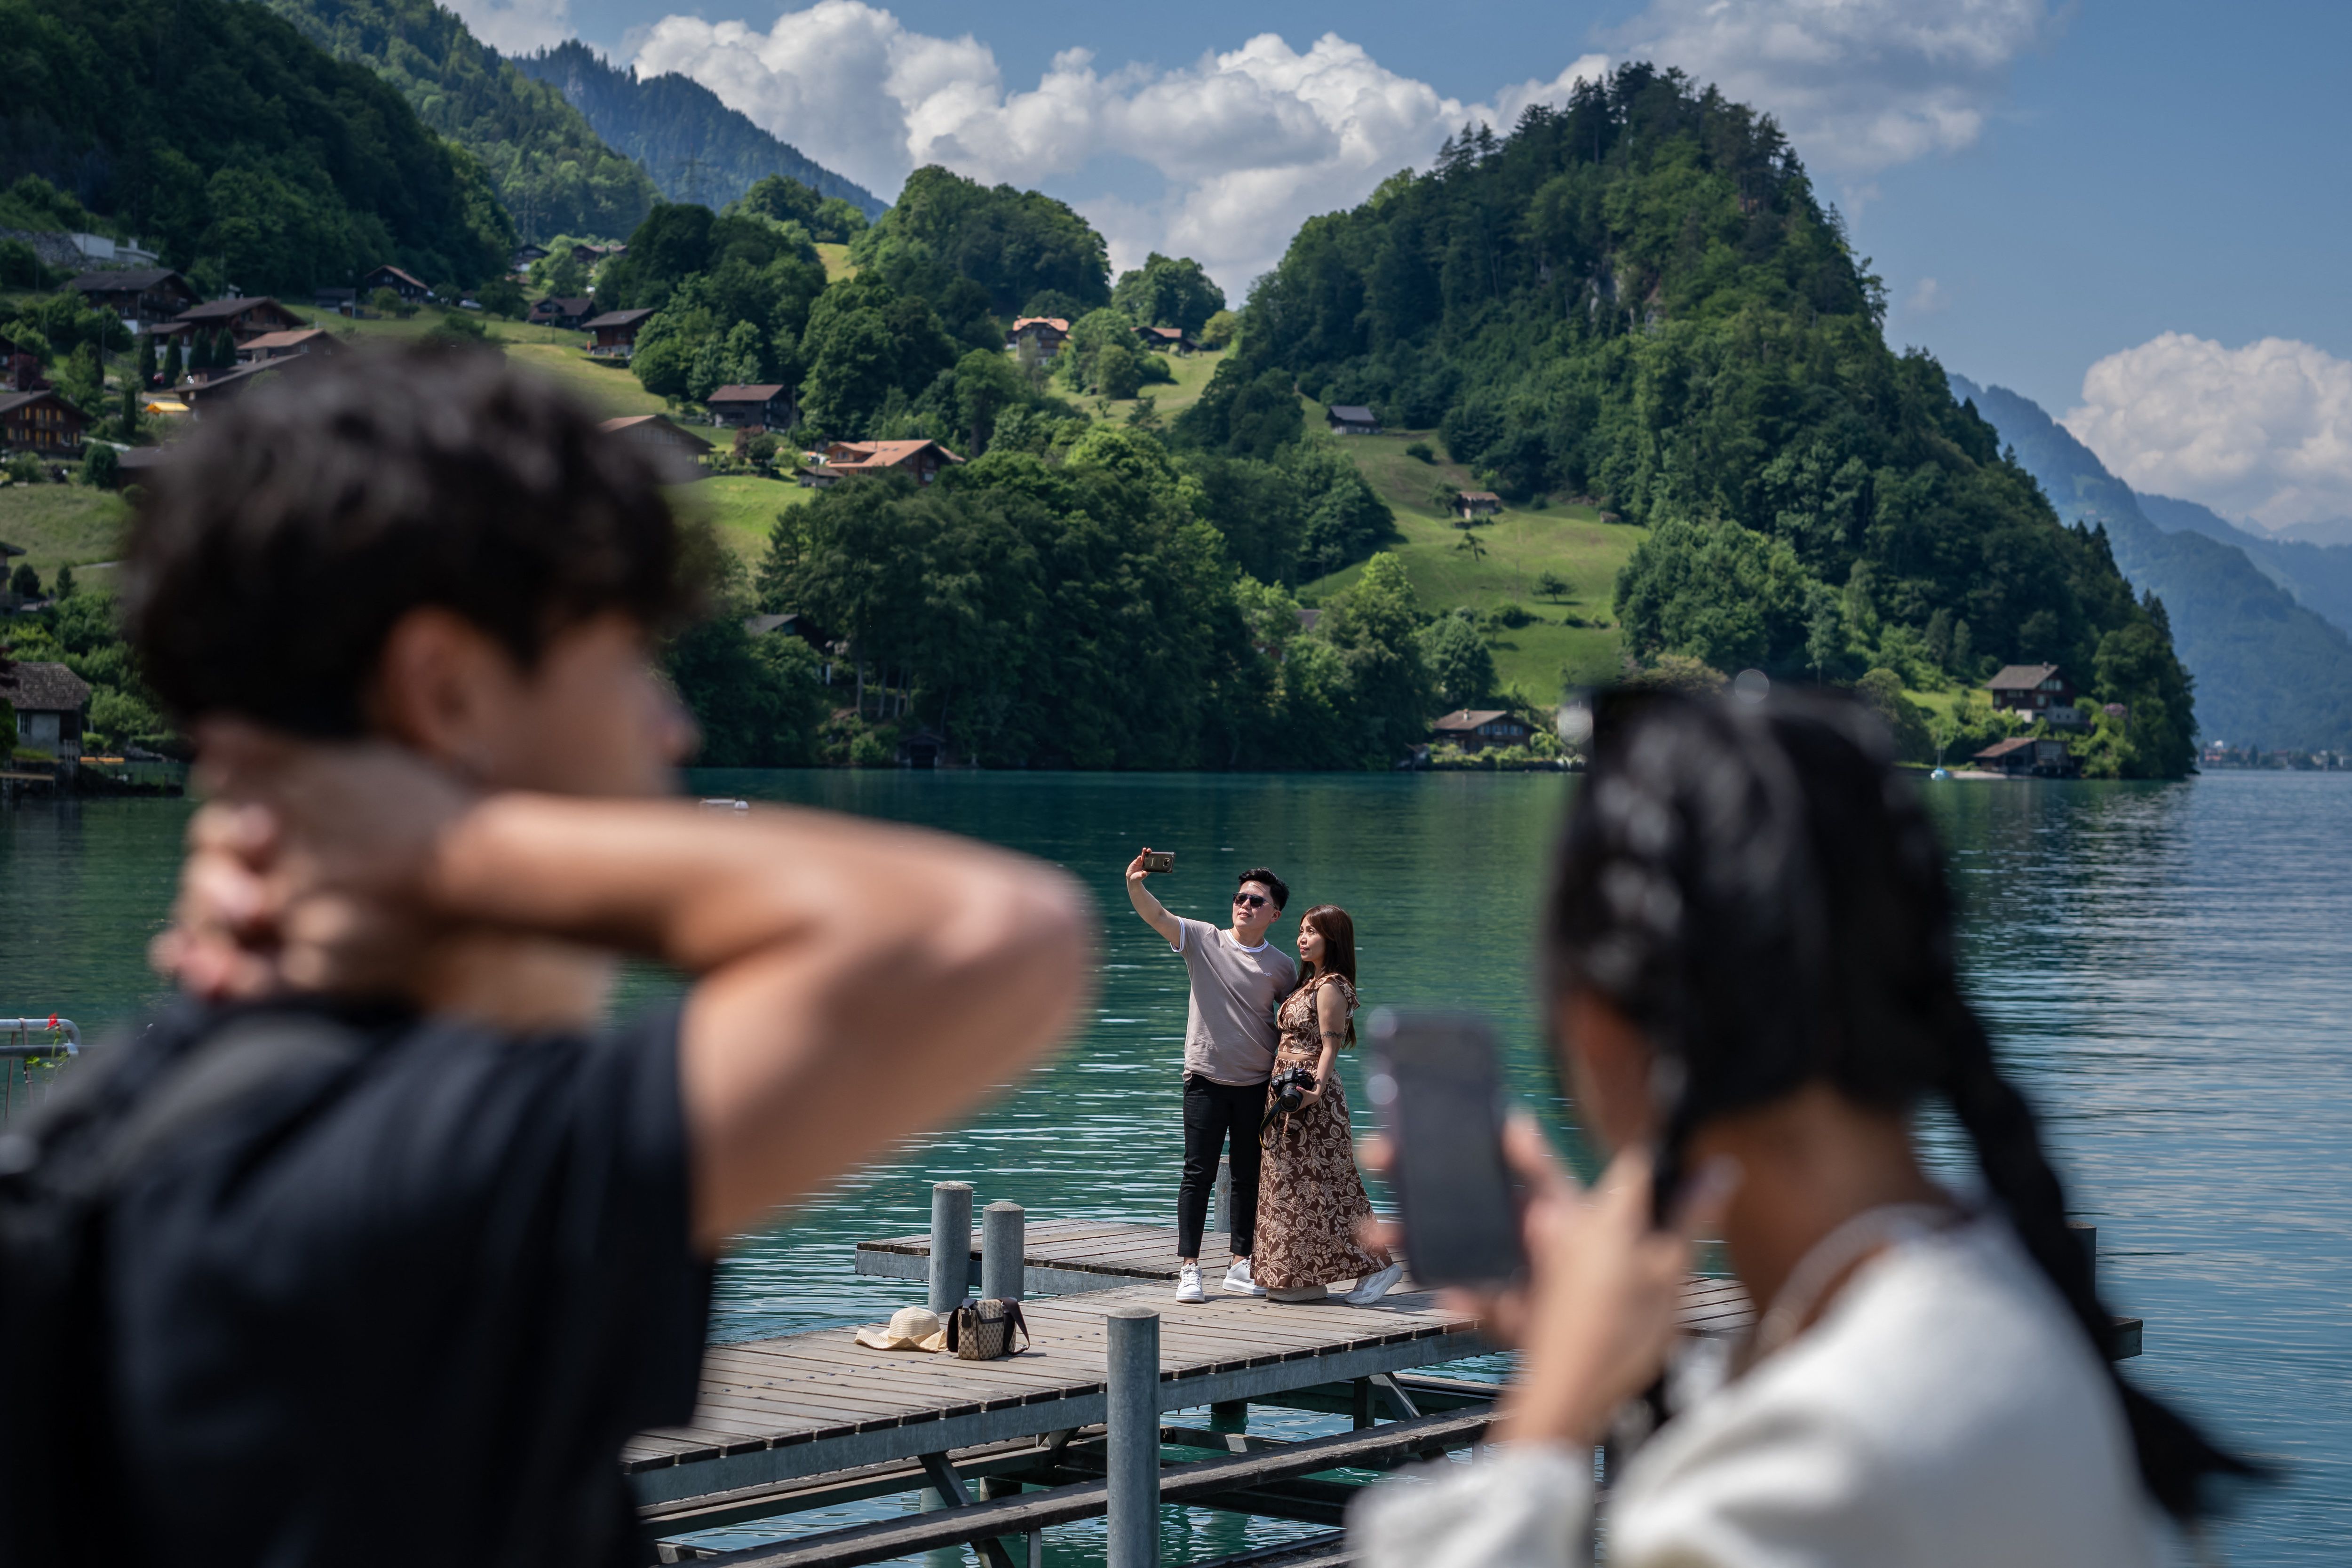 Crash Landing on You (CLOY) Interlaken & Swiss Film locations